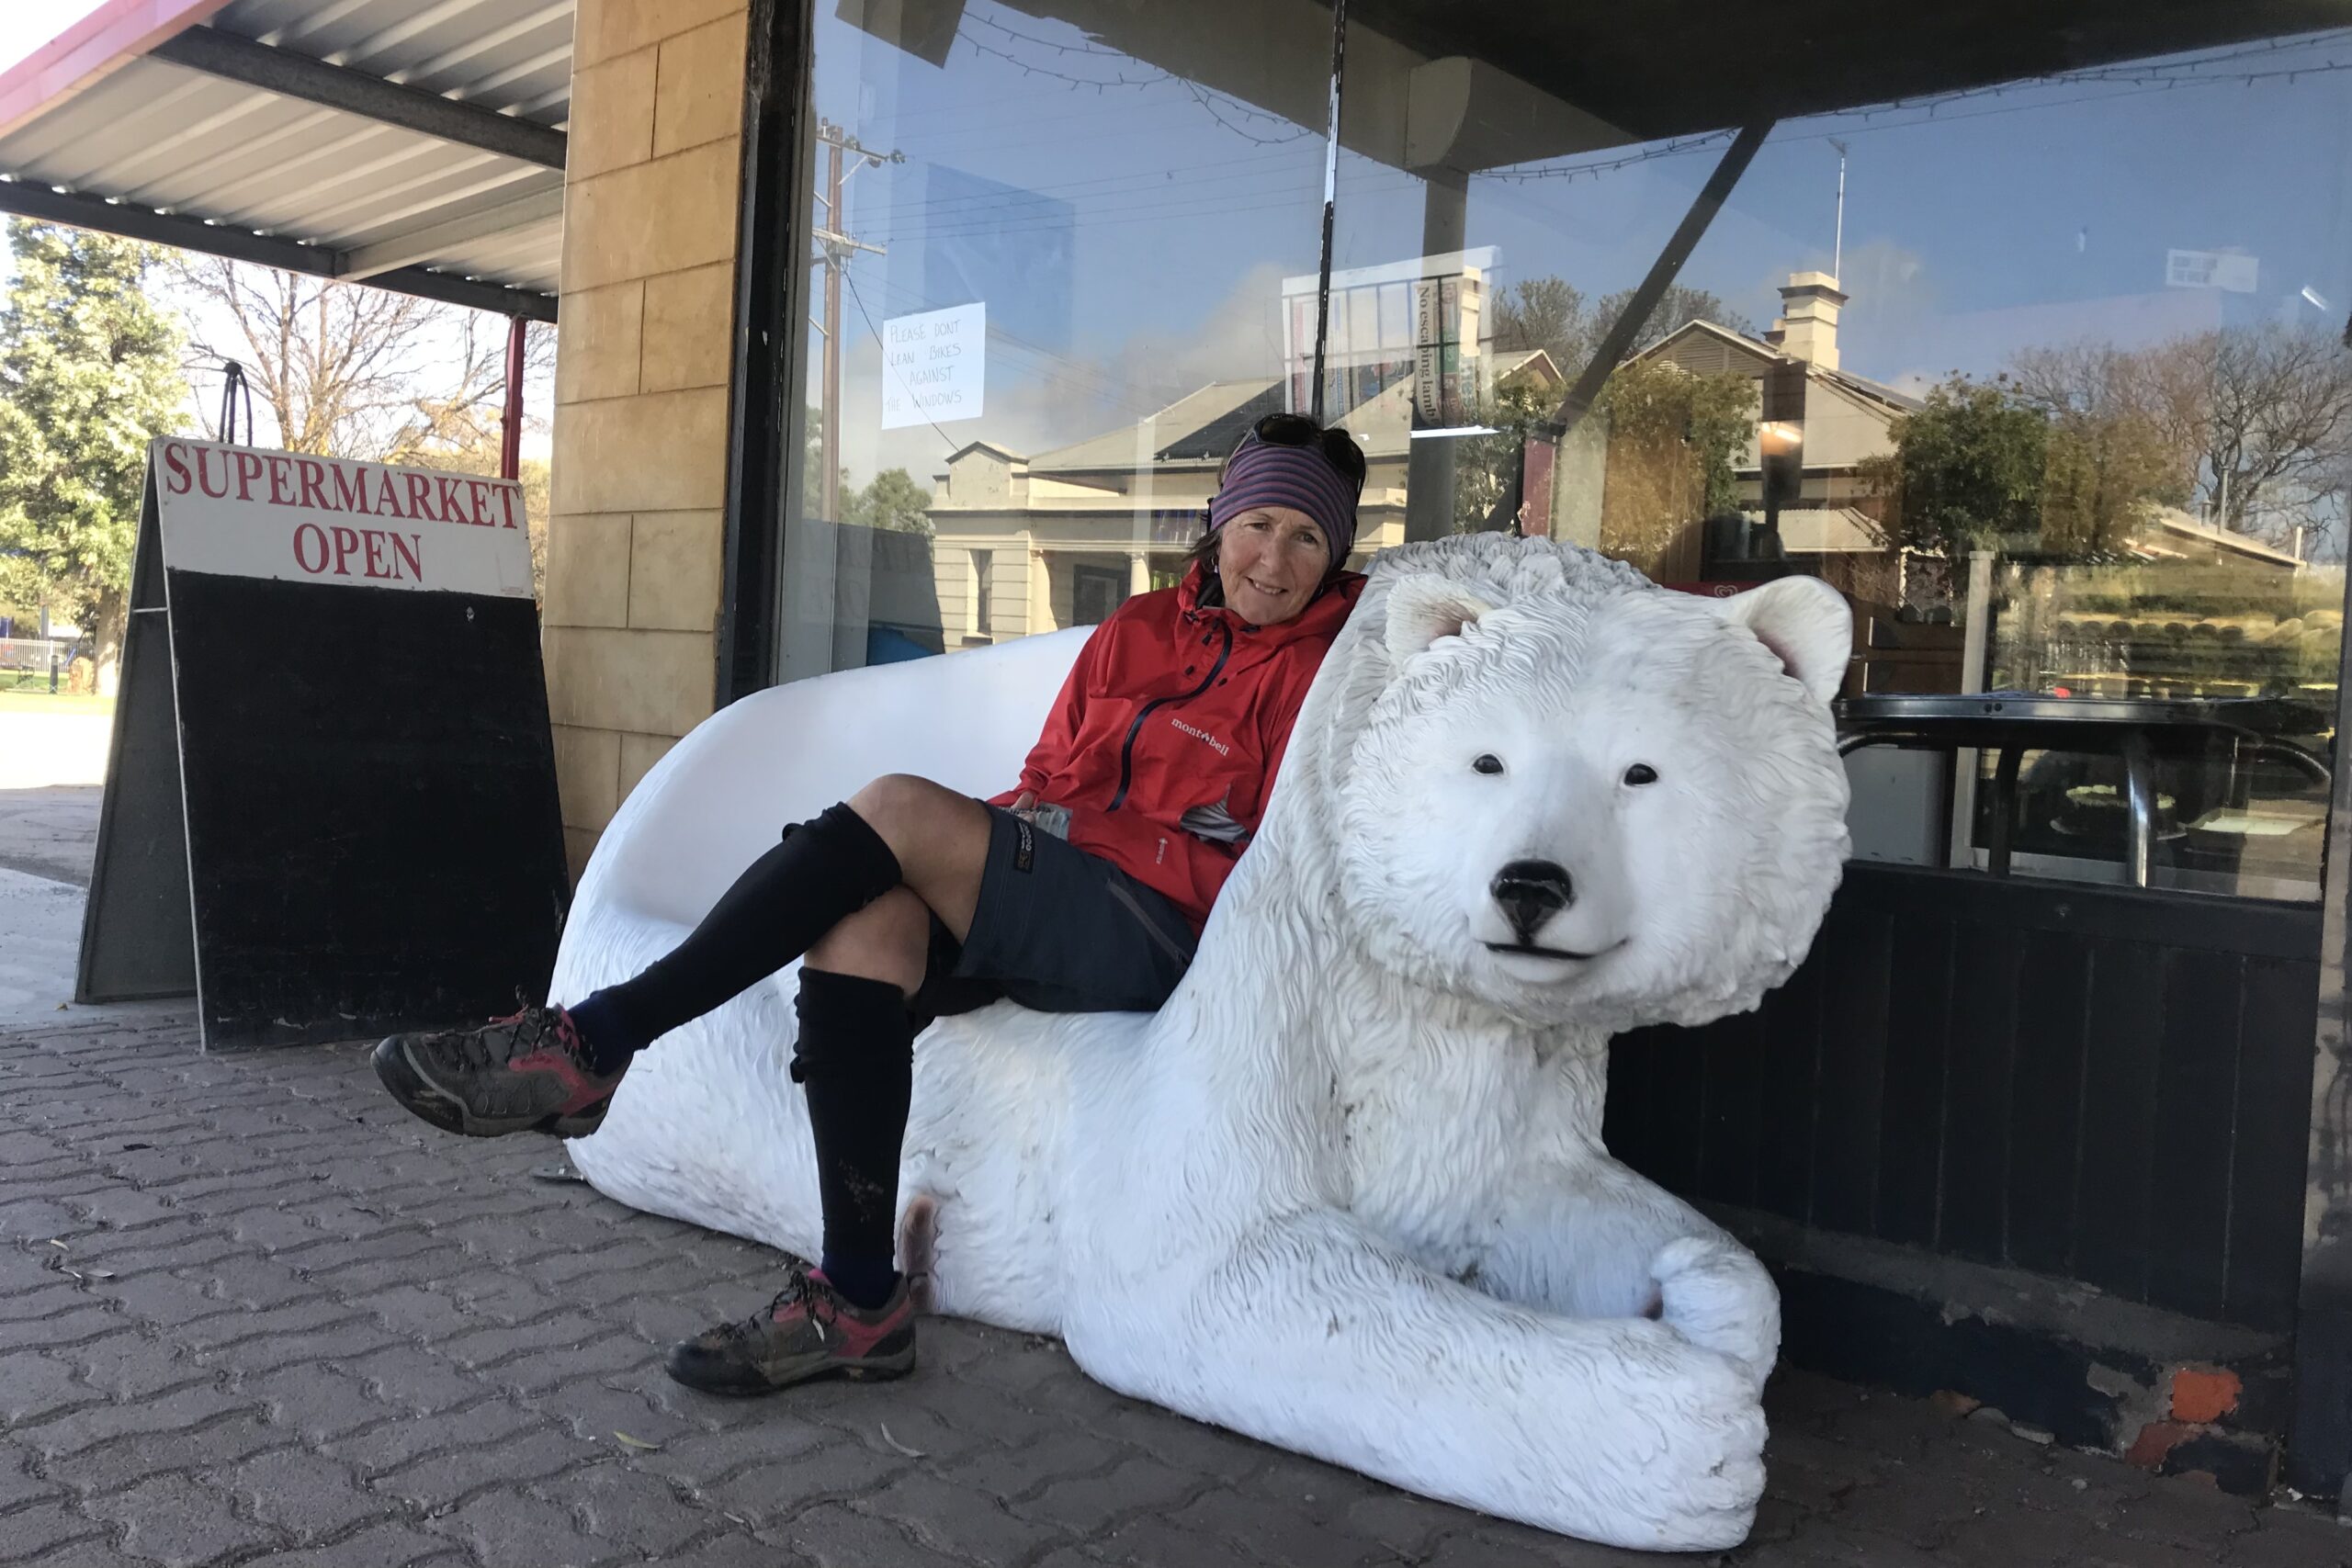 Gotta love sitting on a polar bear in Australia